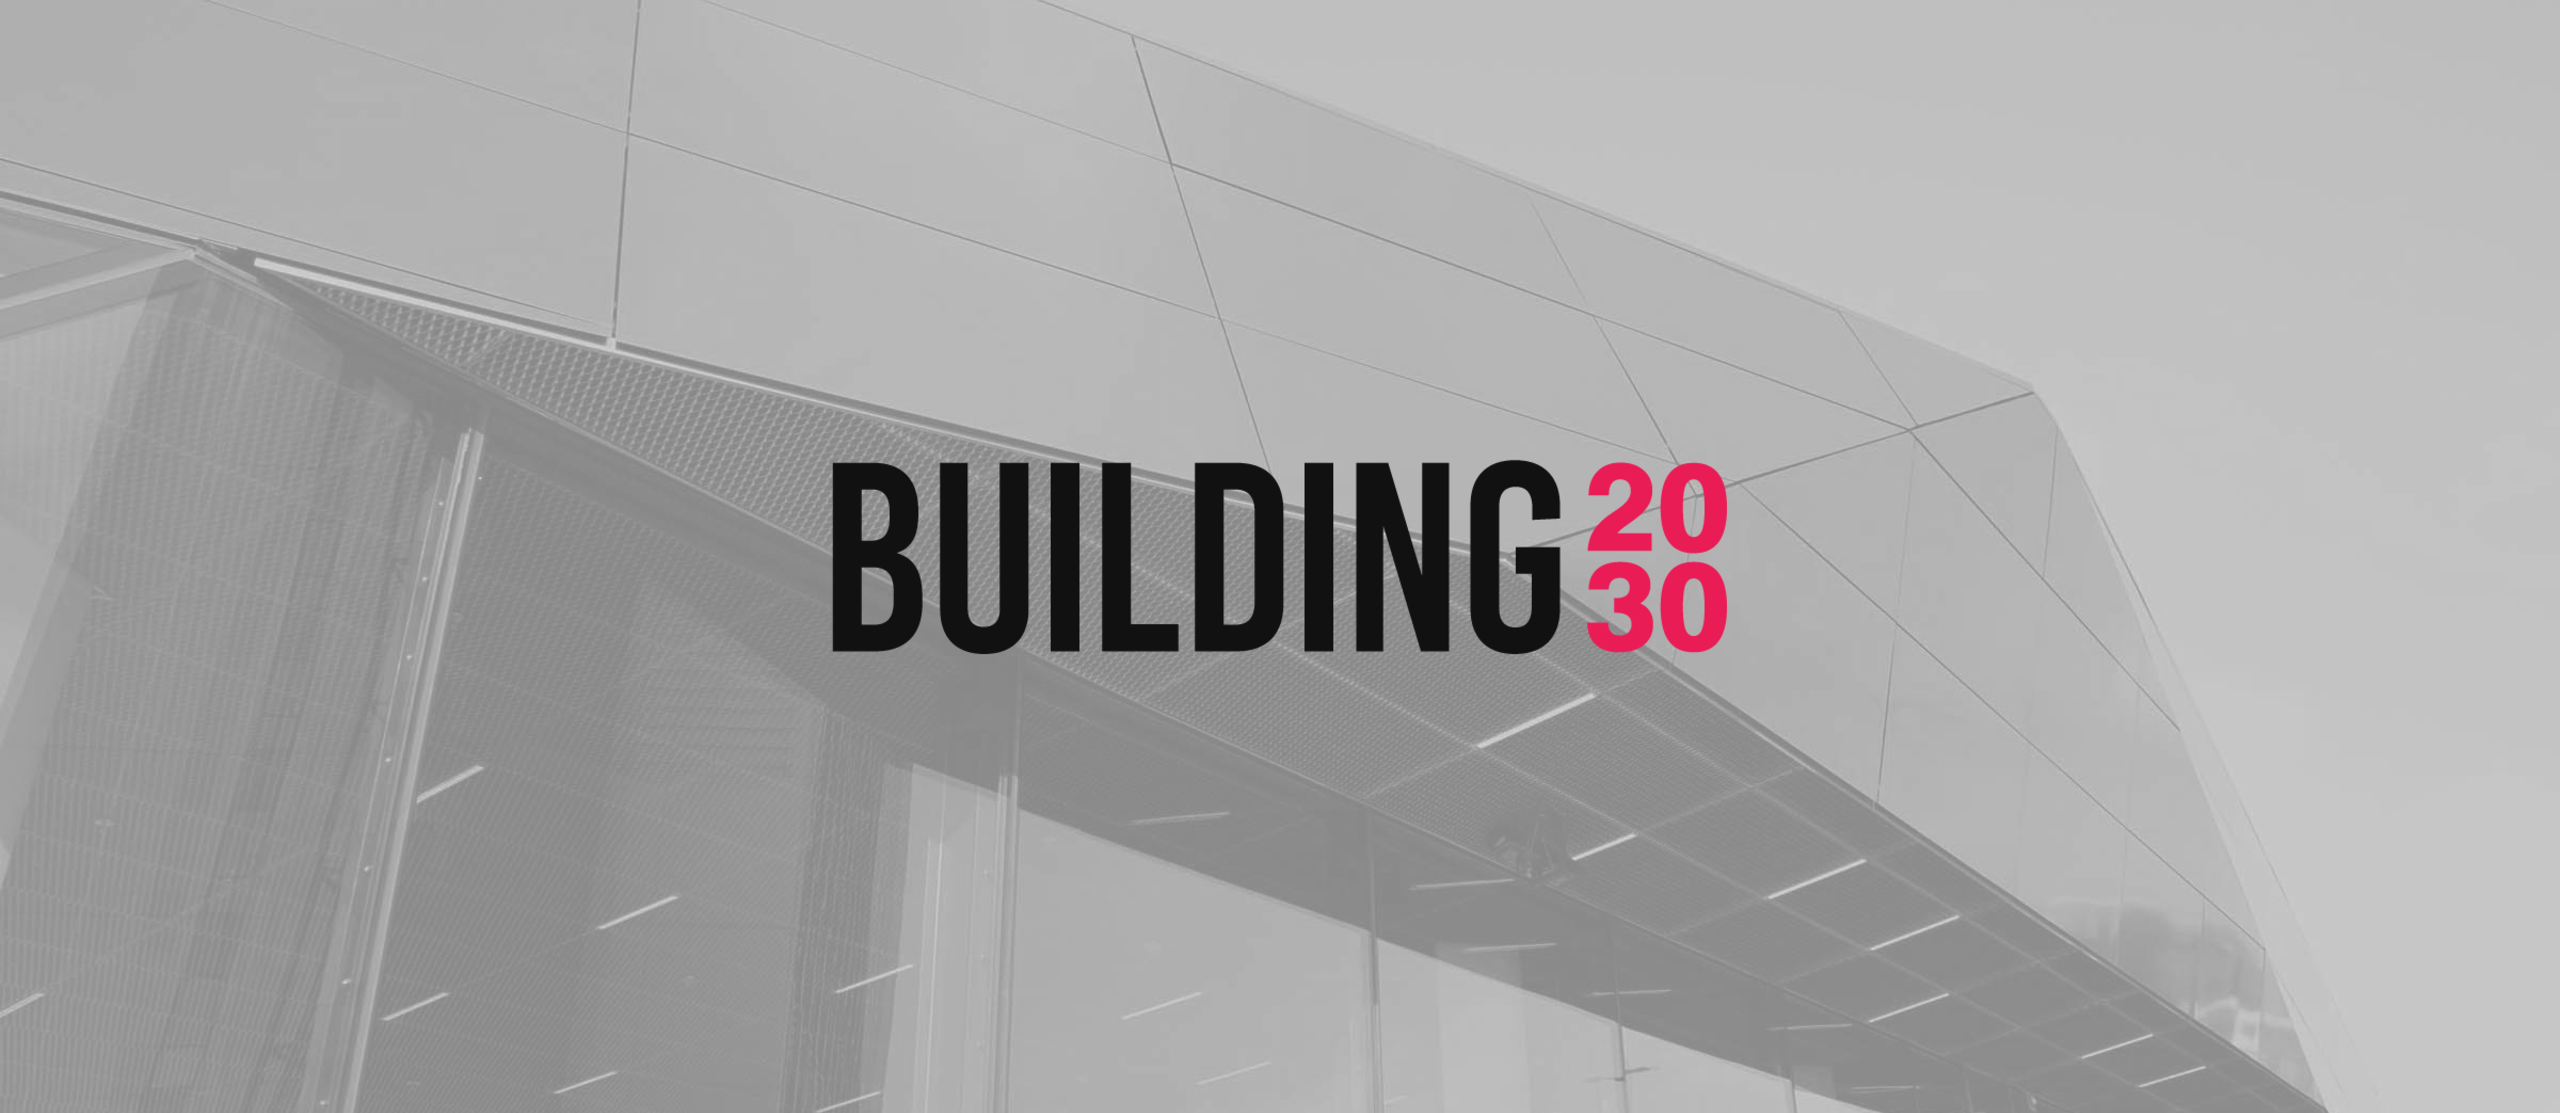 Building 2030